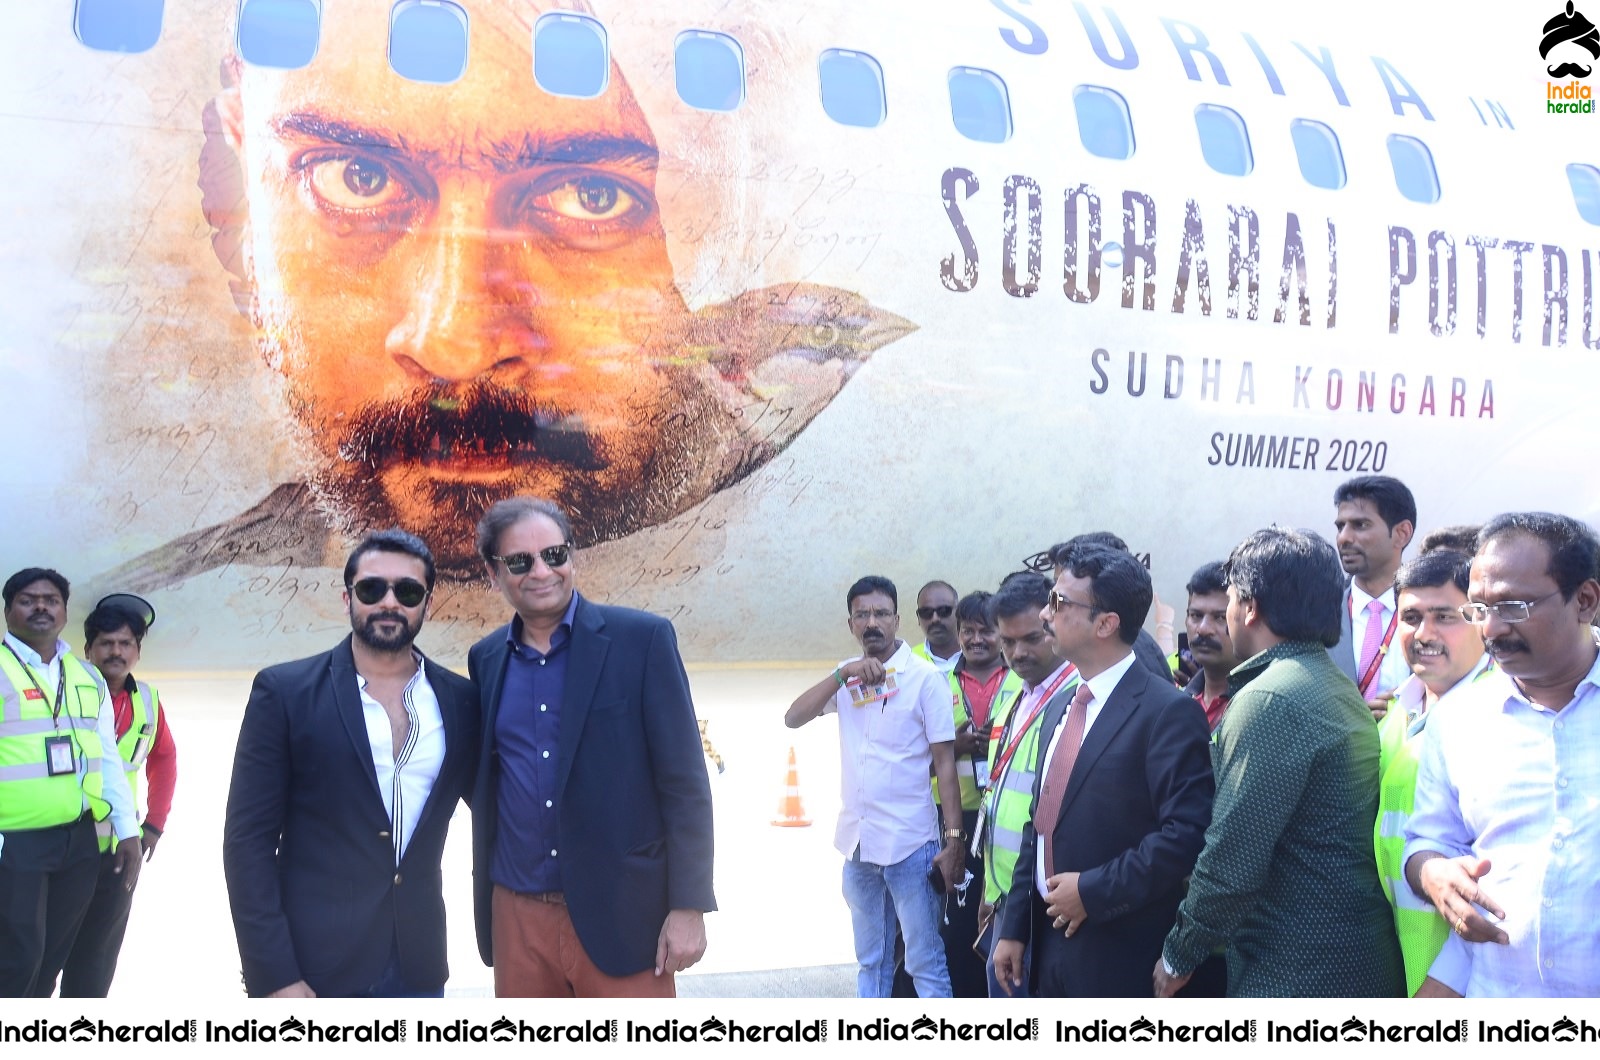 Actor Suriya with his Father Sivakumar takes under privileged Children in Aeroplane for Soorarai Potru Set 2